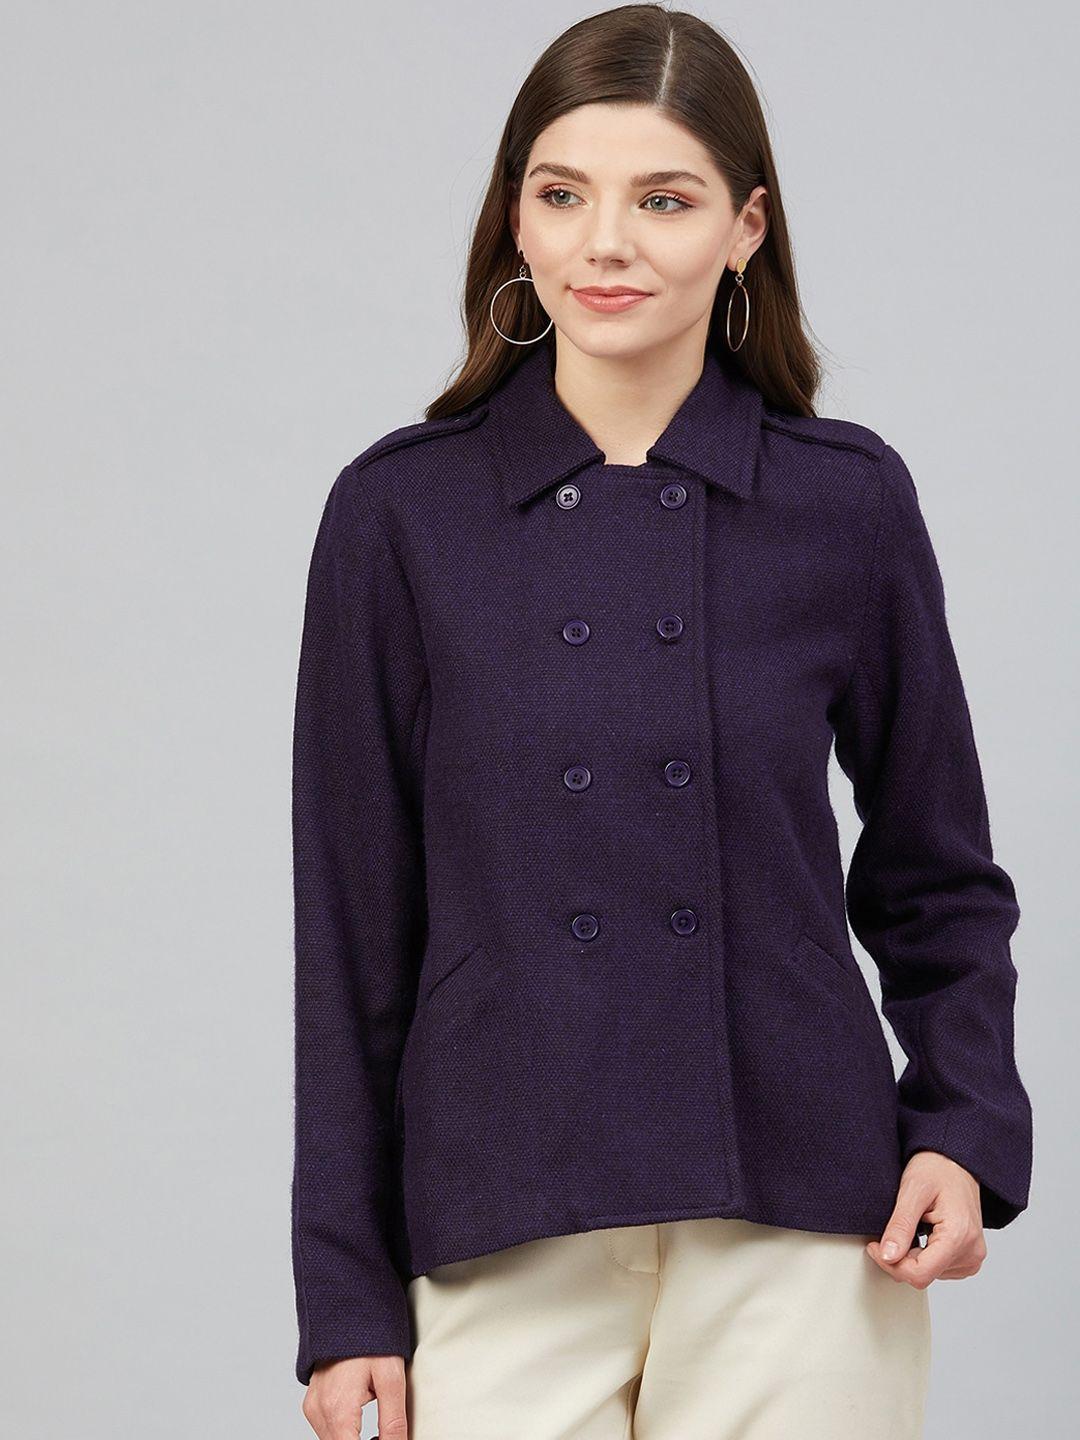 marie claire purple woollen tailored jacket